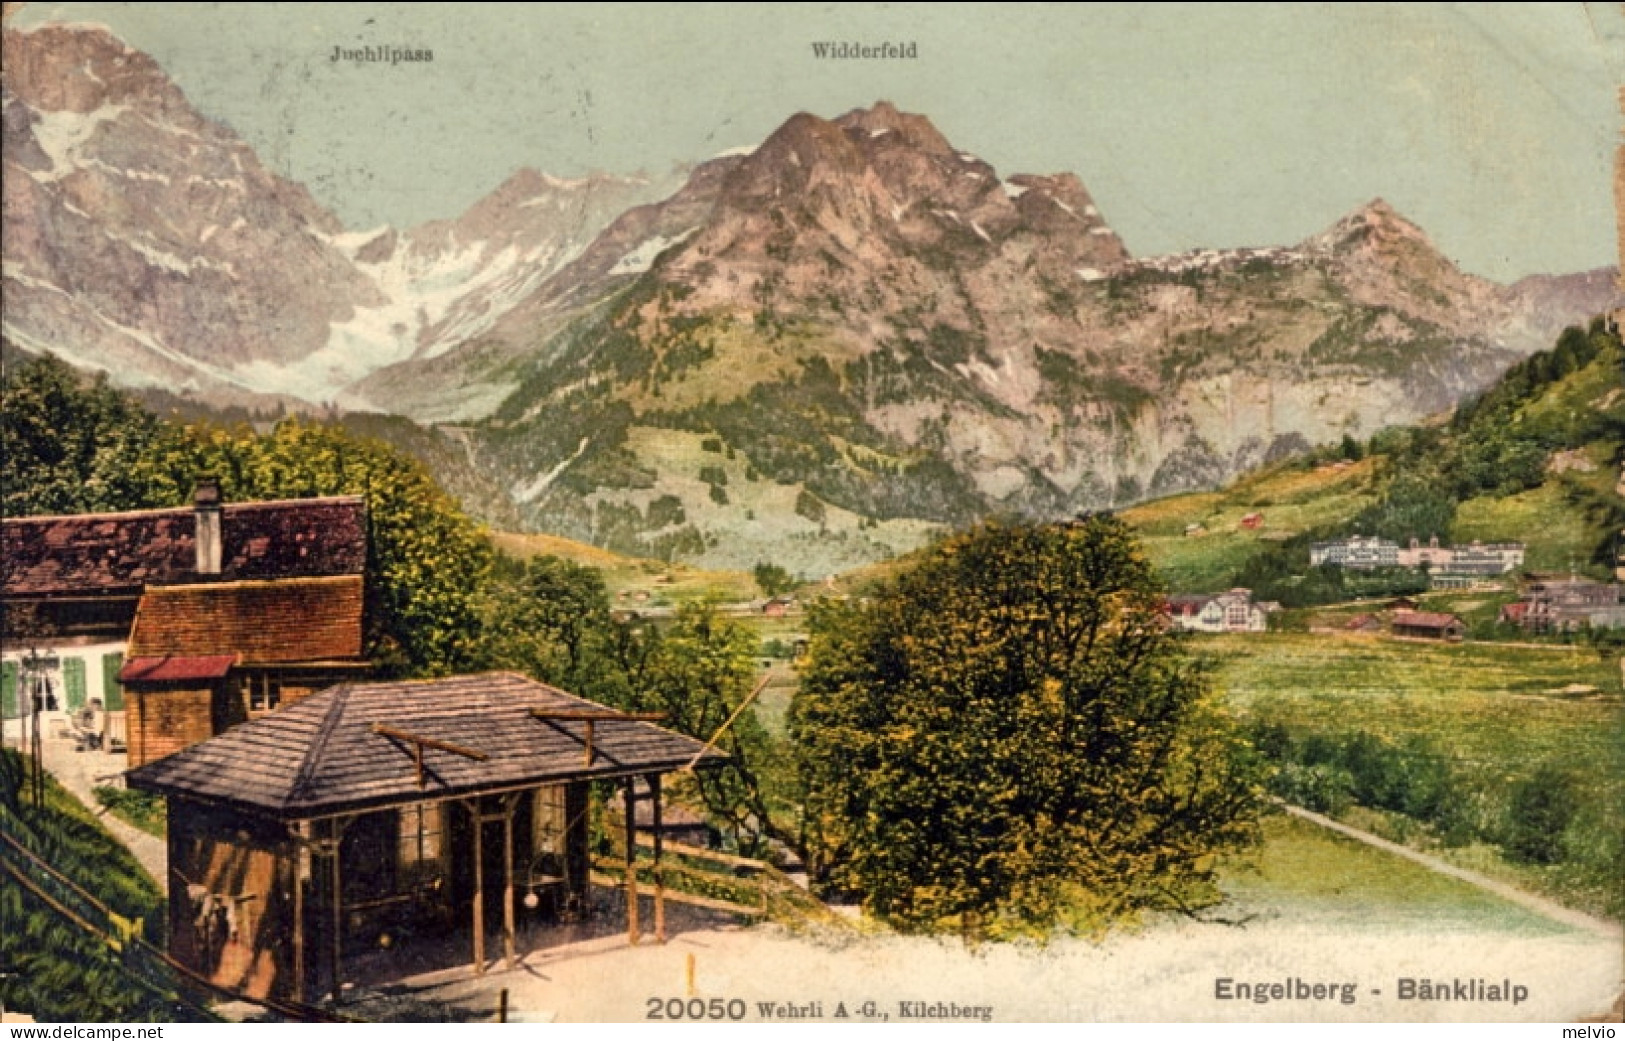 1907-Svizzera Engelberg Banklialp, Viaggiata Diretta In Belgio - Postmark Collection